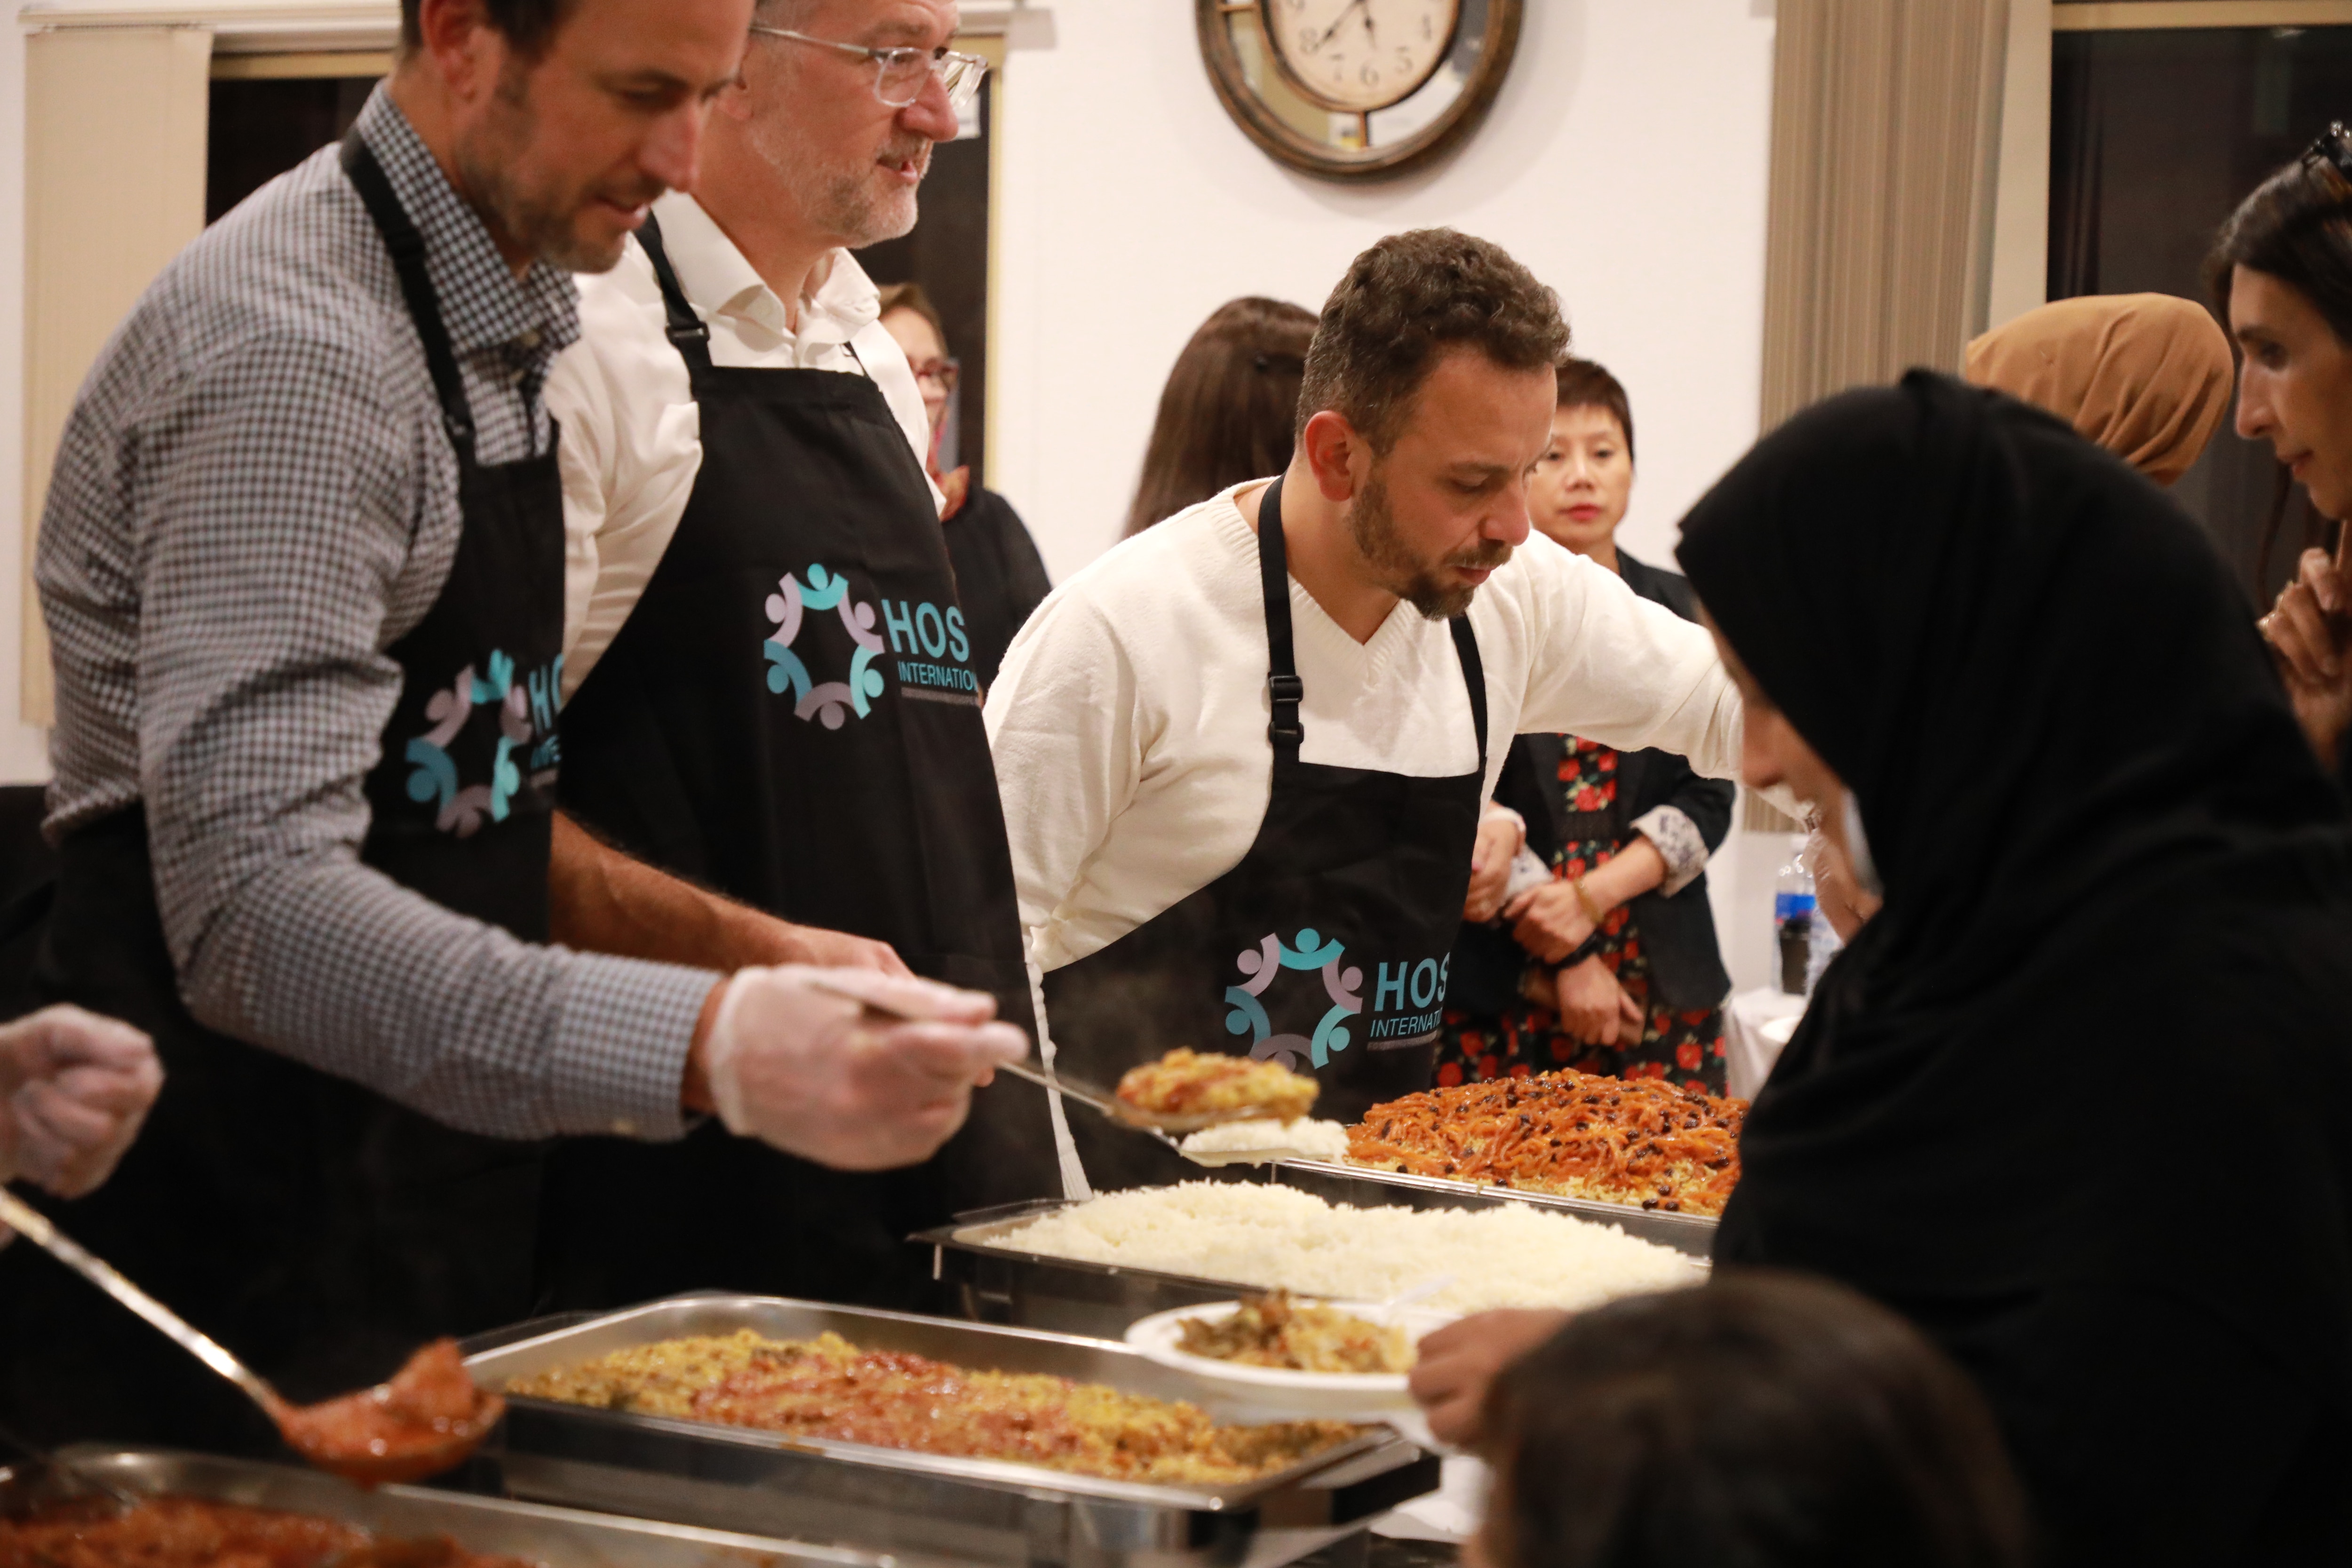 HOST International volunteers serve up the Iftar meal.